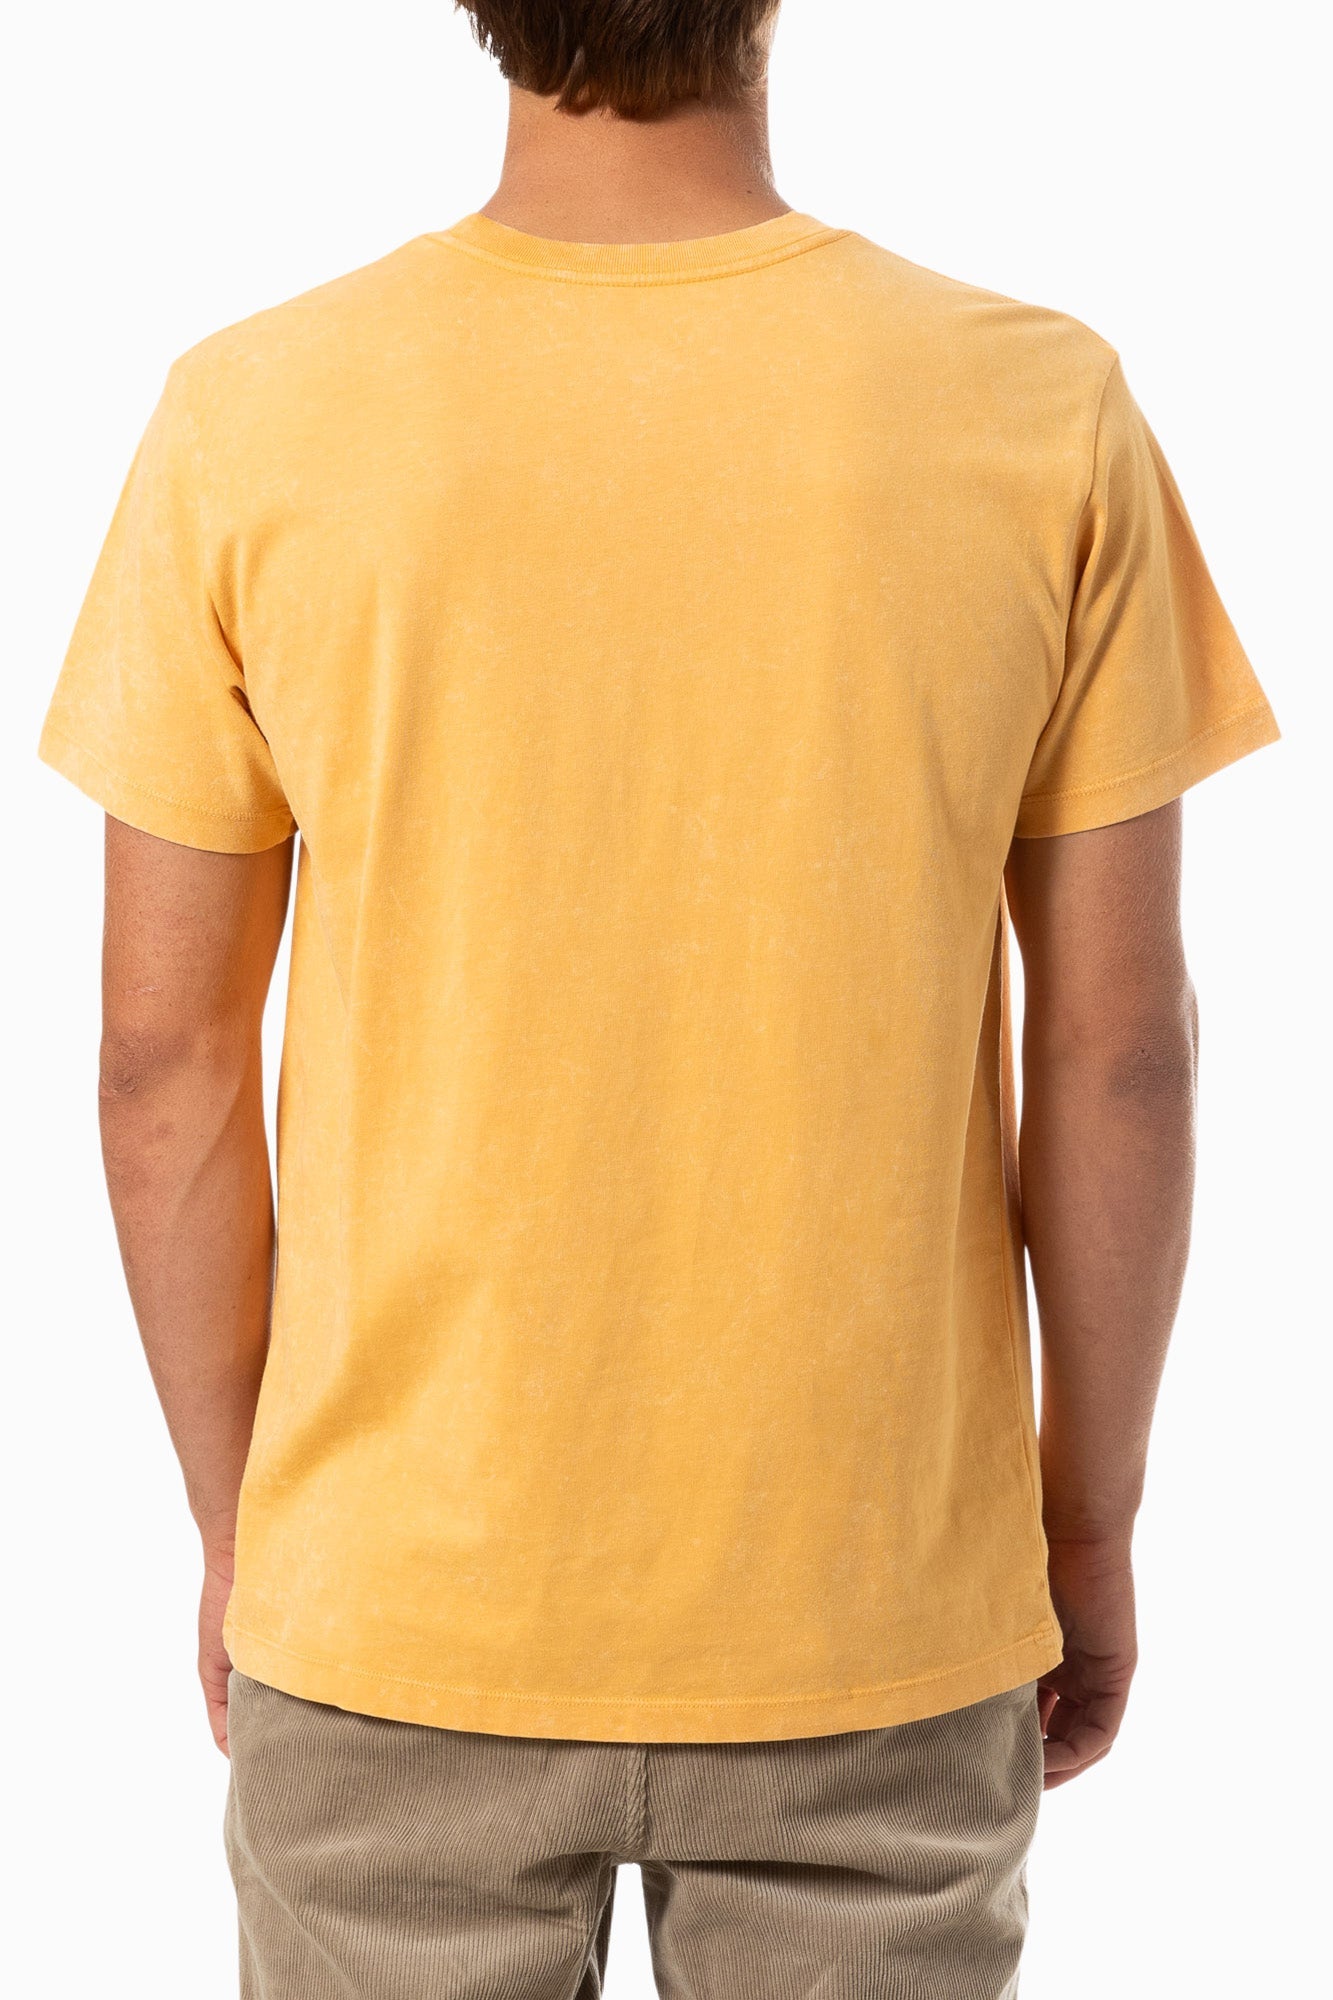 
                  
                    Camiseta Base Tee - Corn Silk Sand Wash
                  
                